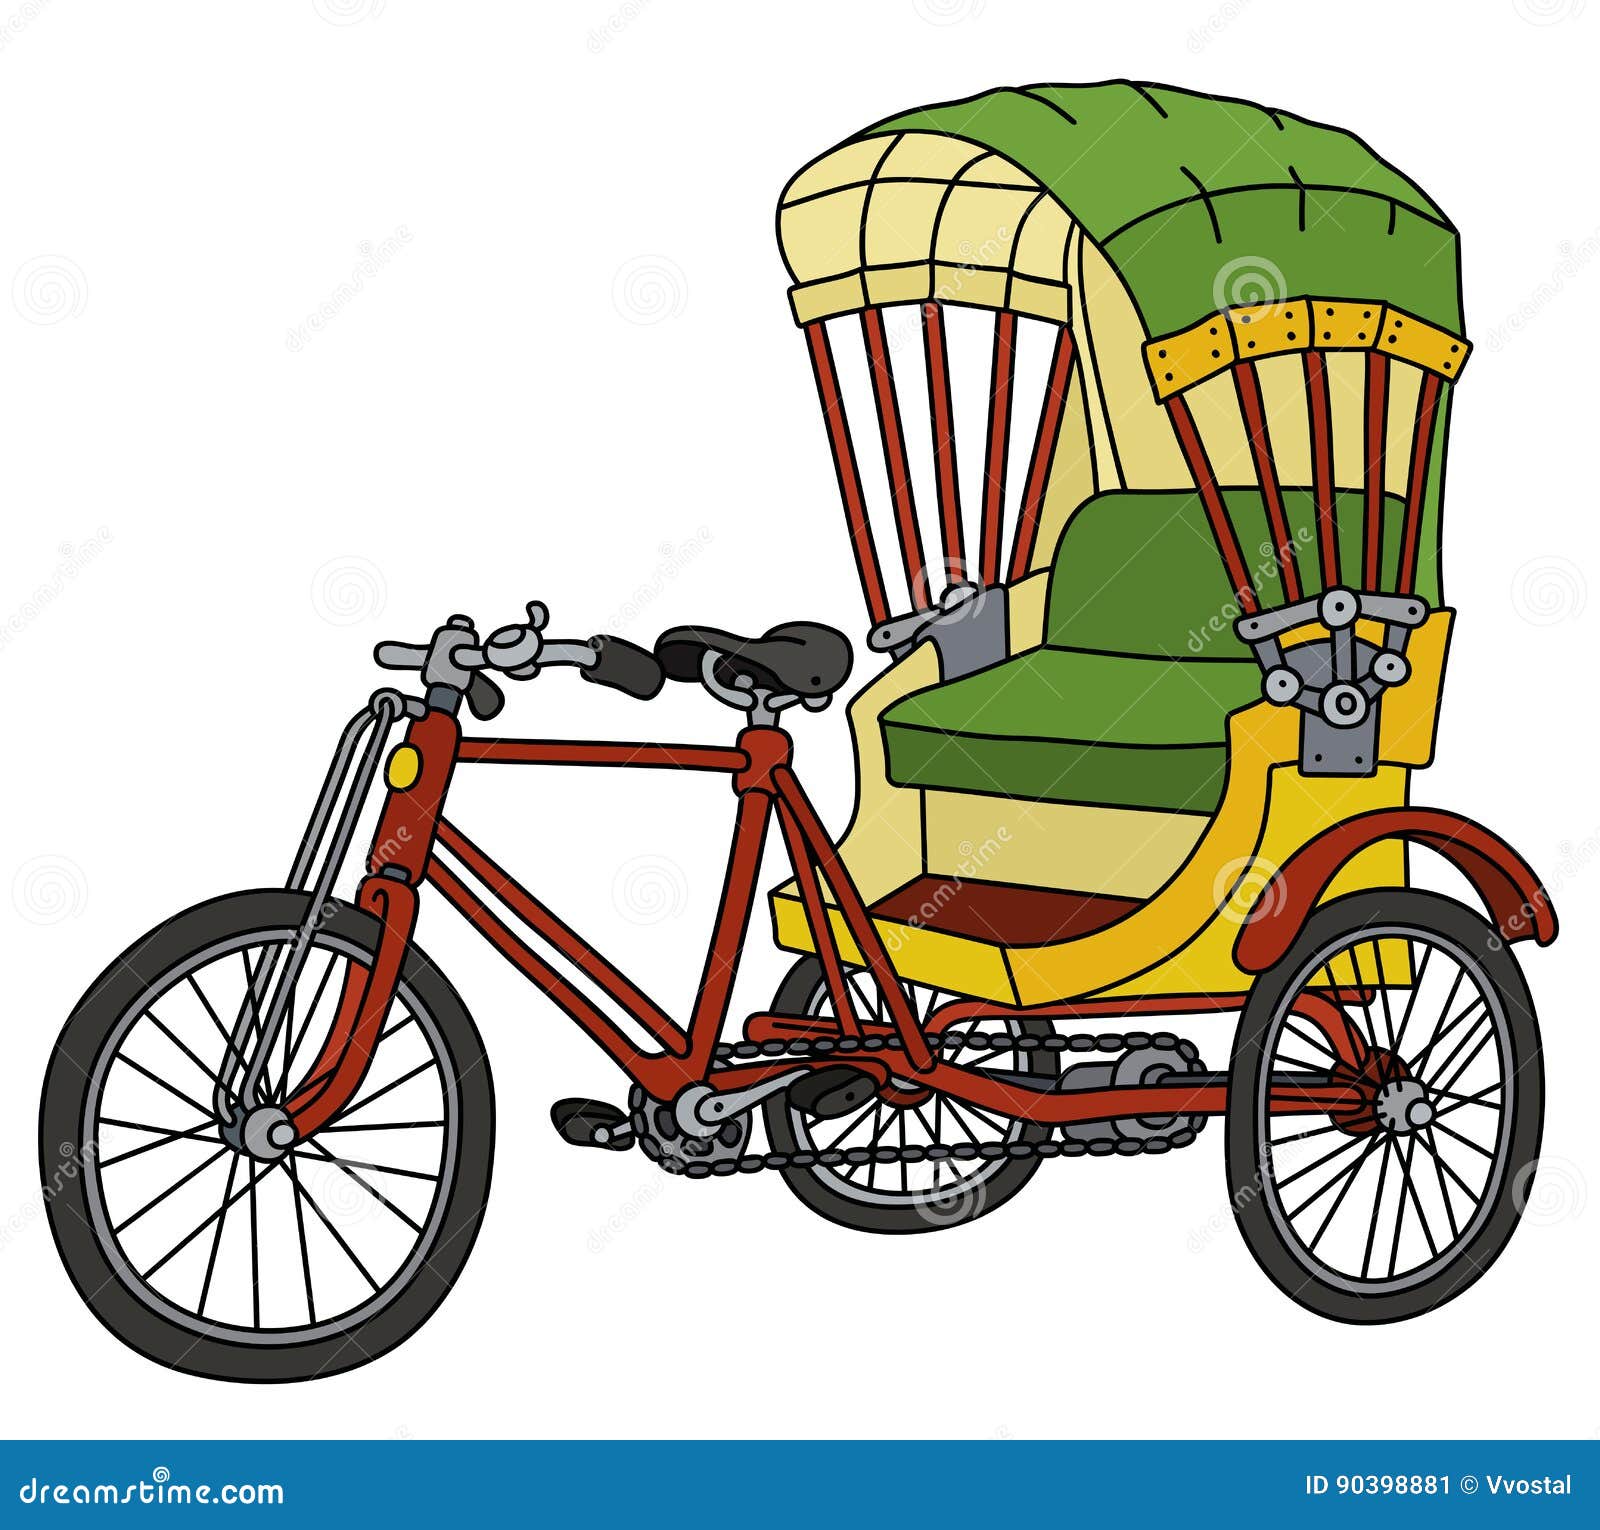 Premium Vector  Drawing of the rickshaw in india